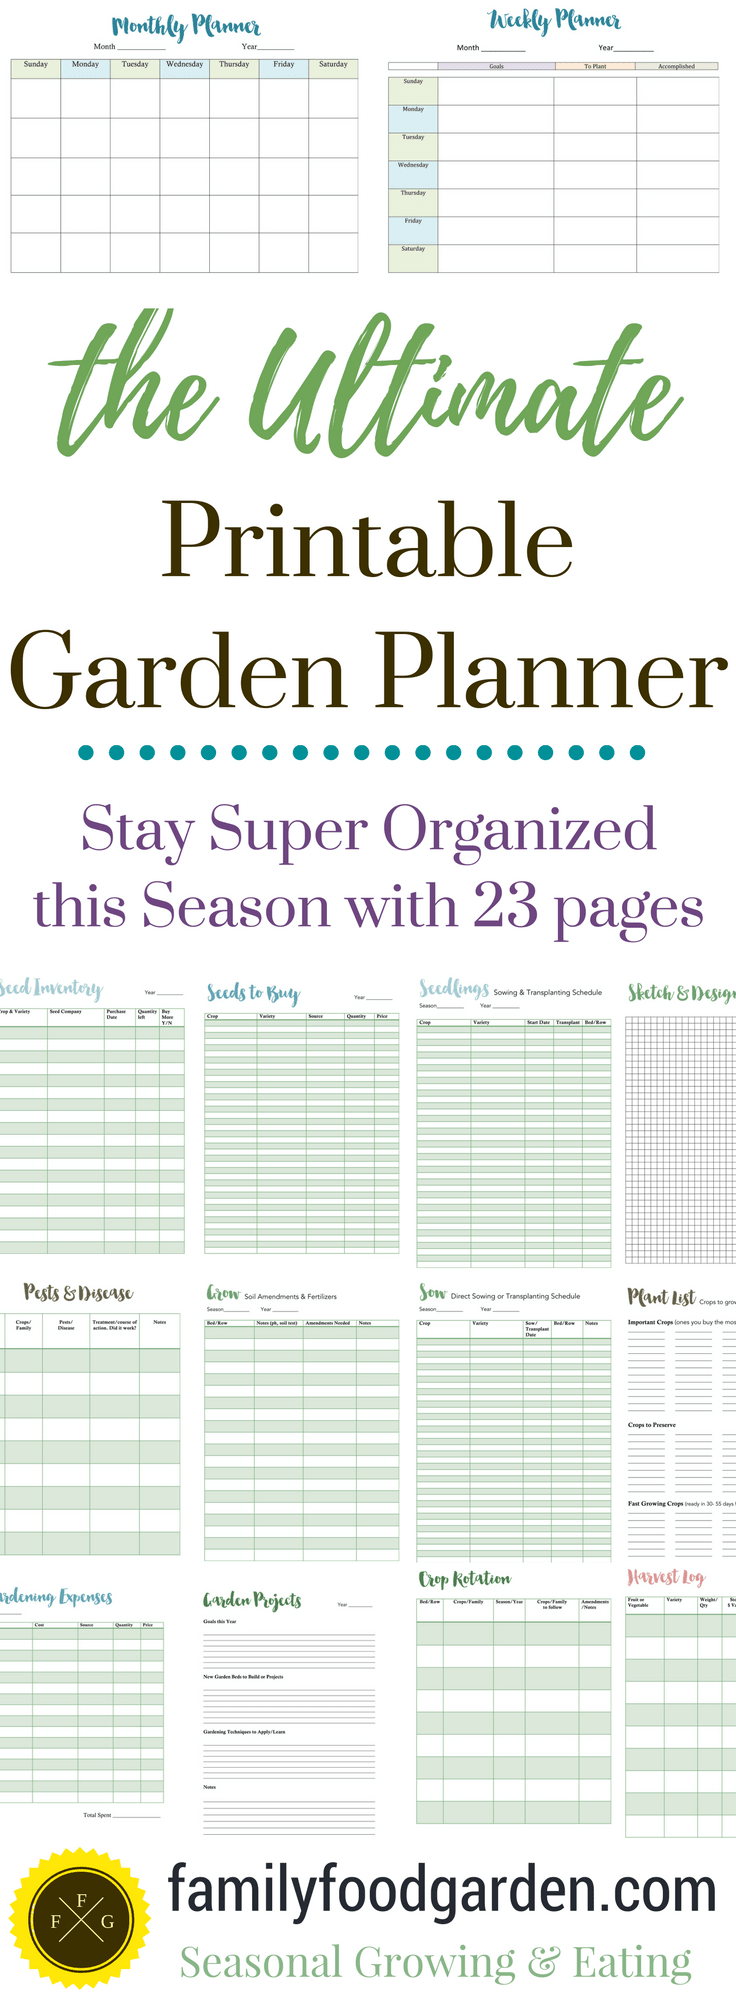 Garden Planning: the Ultimate Printable Garden Planner ~